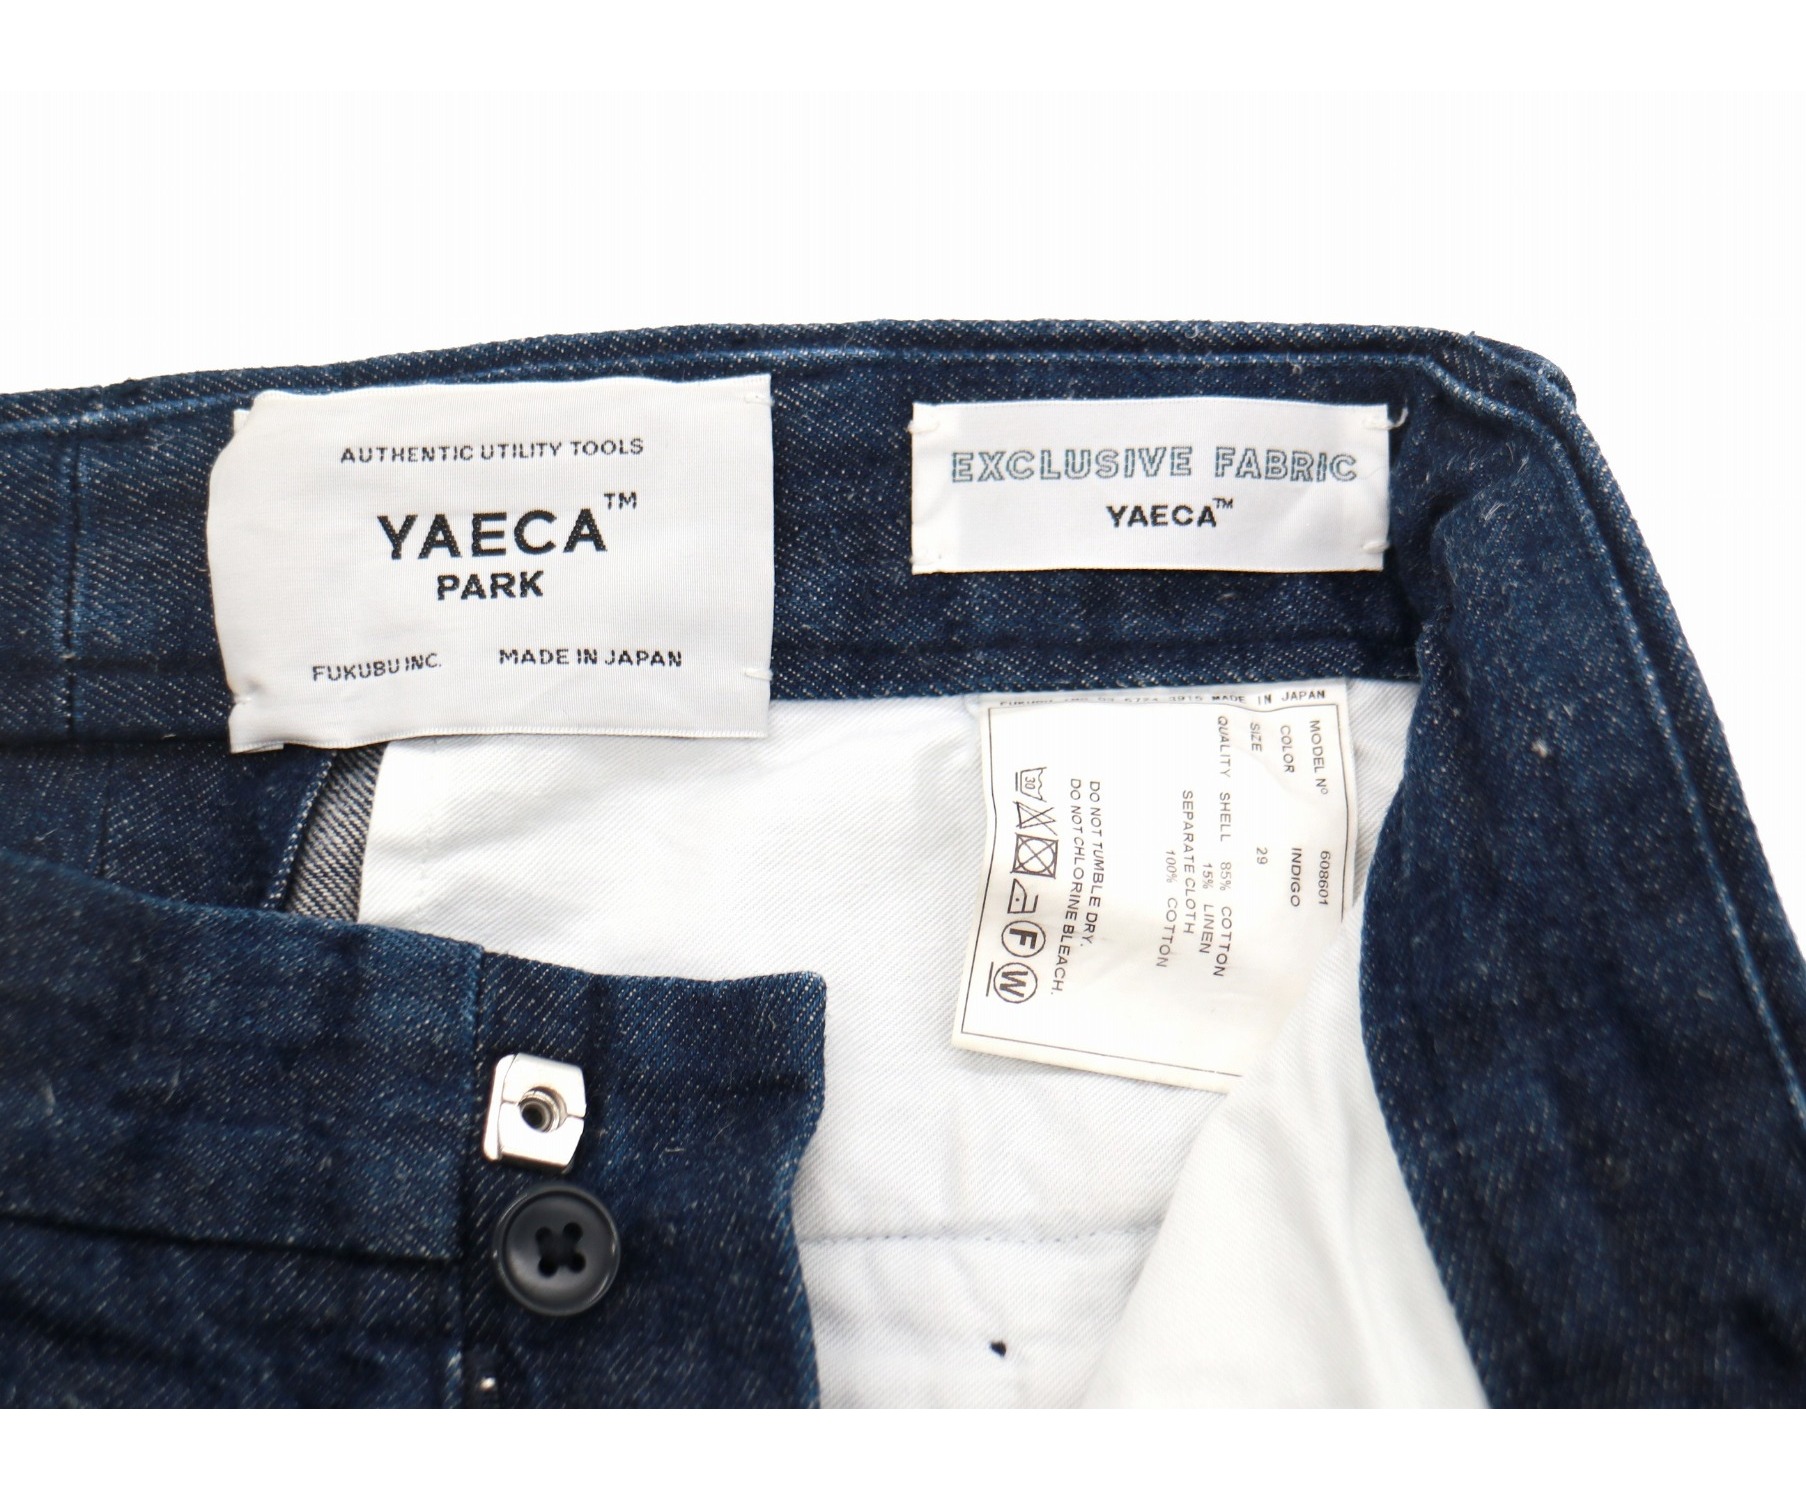 YAECA (ヤエカ) デニムパンツ インディゴ サイズ:29表記 608601・exclusive fabric・YAECA PARK